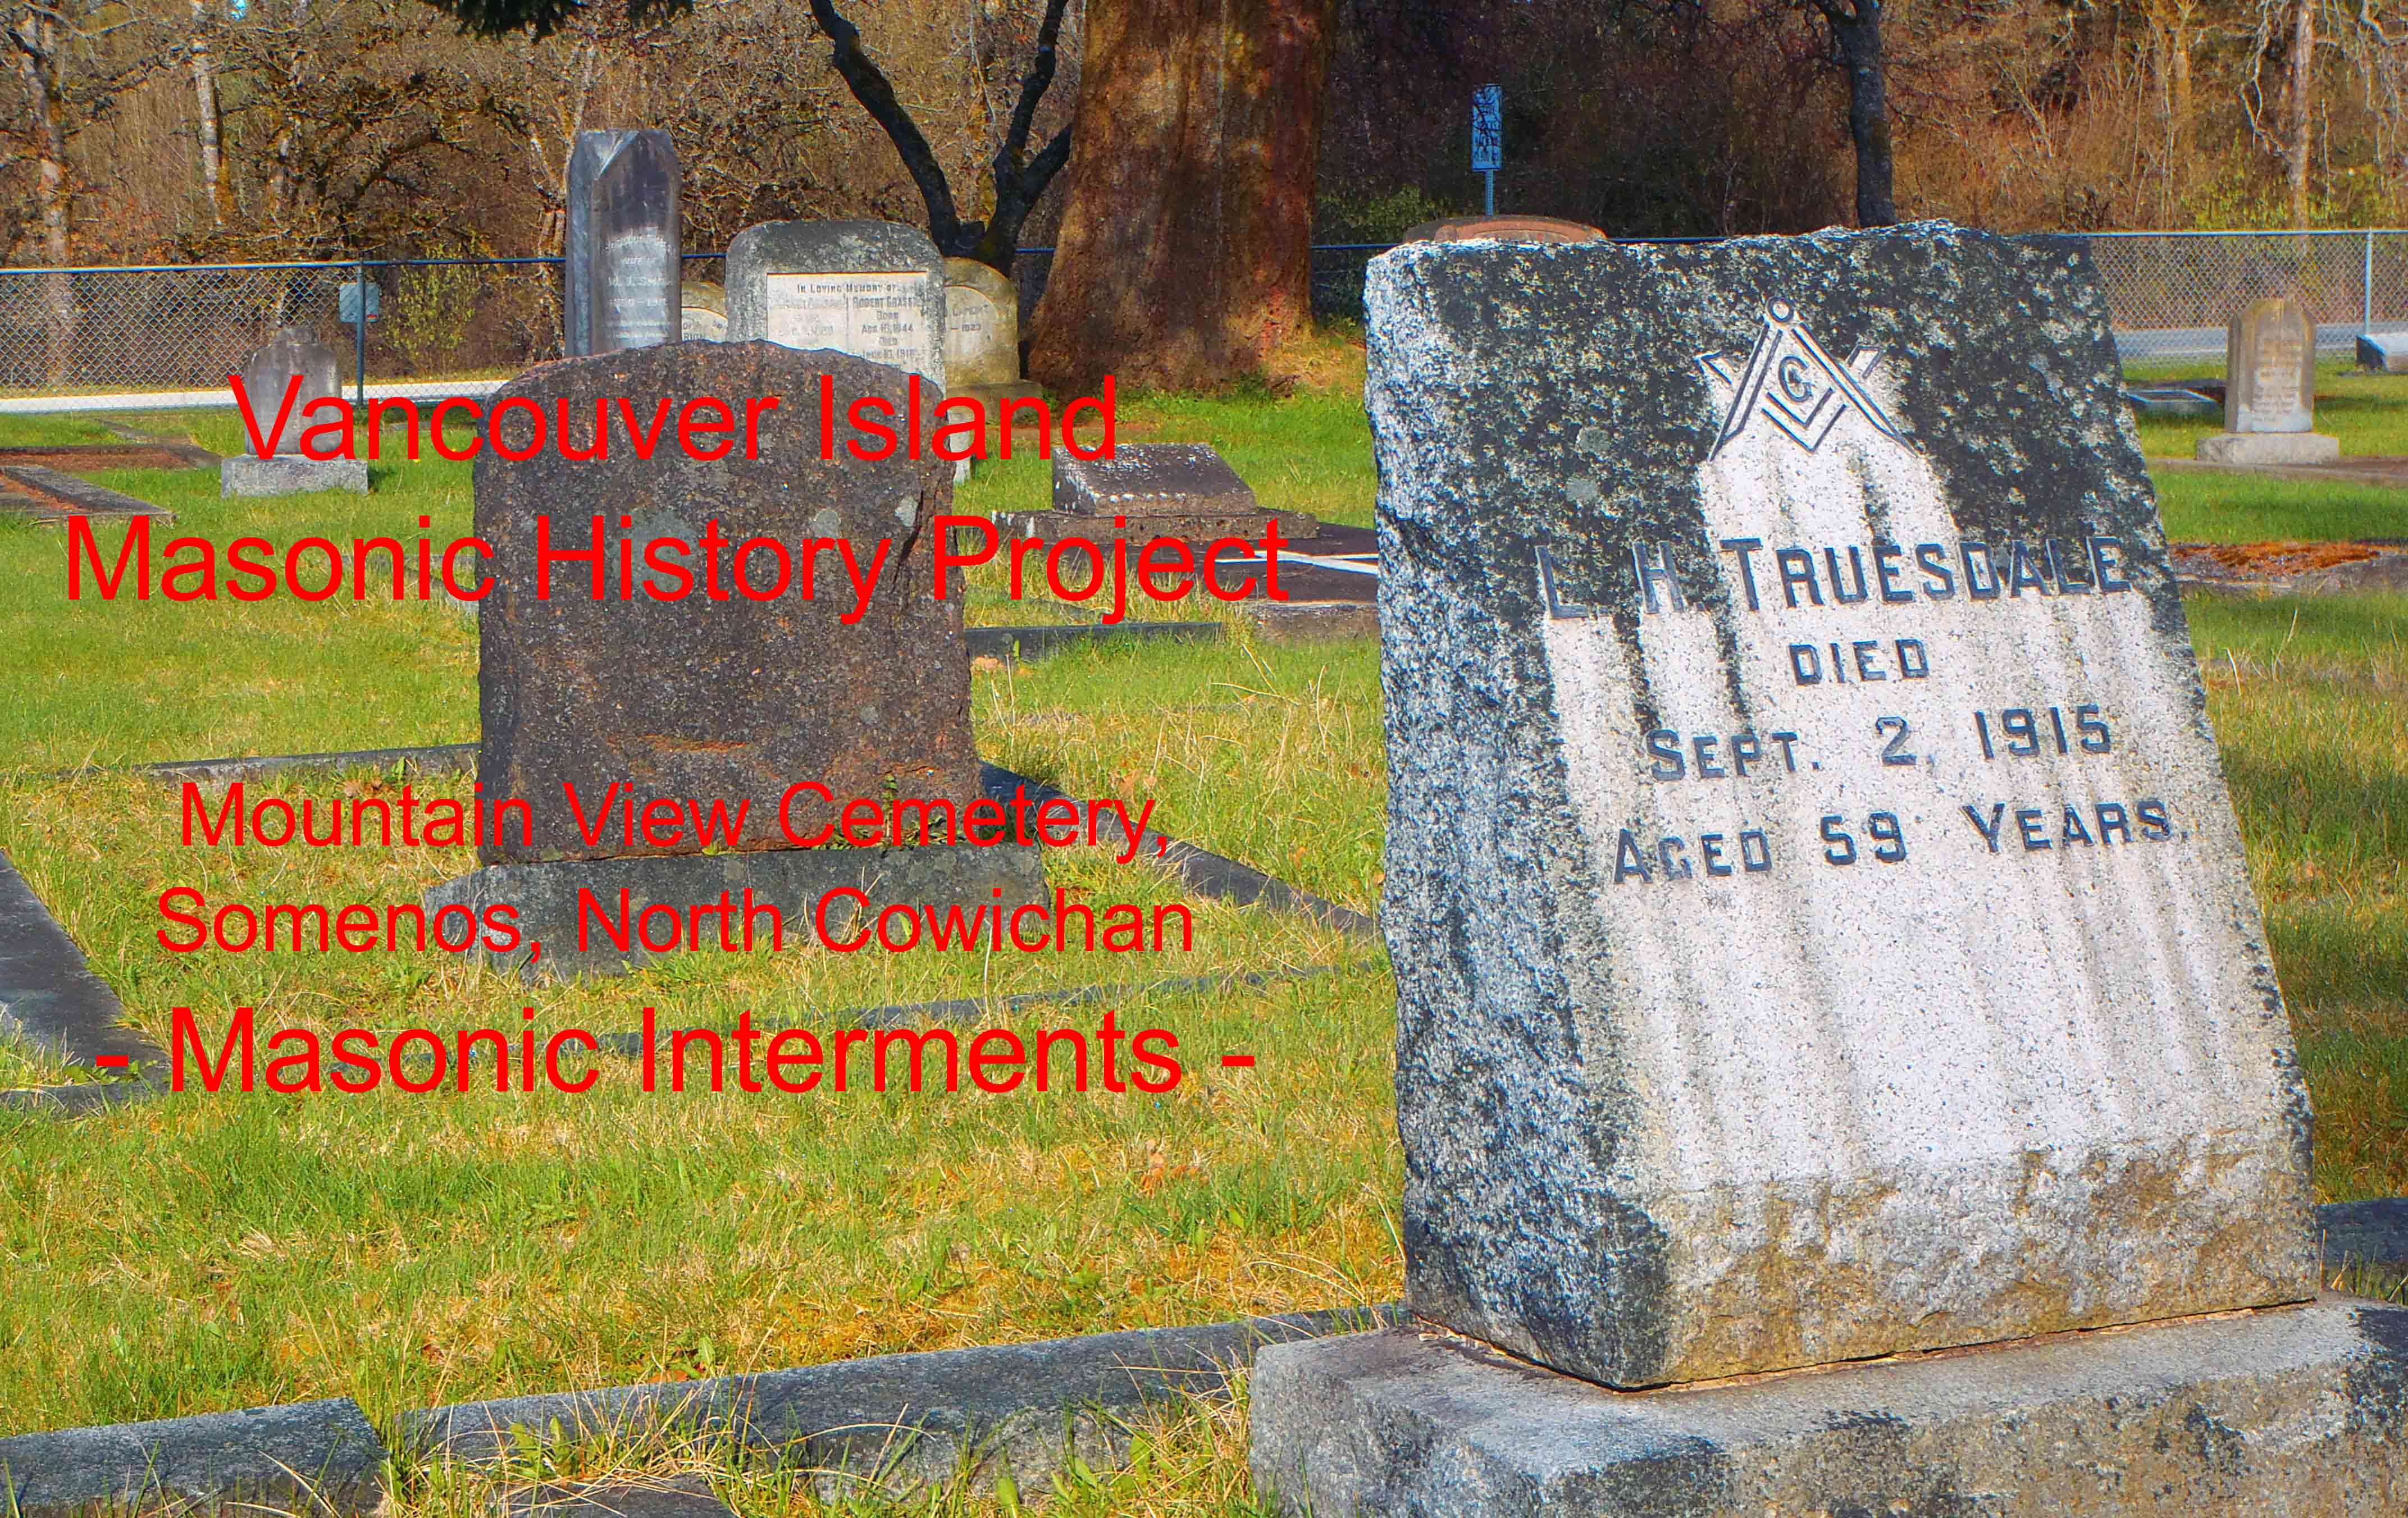 Mountain View cemetery - Masonic Interments